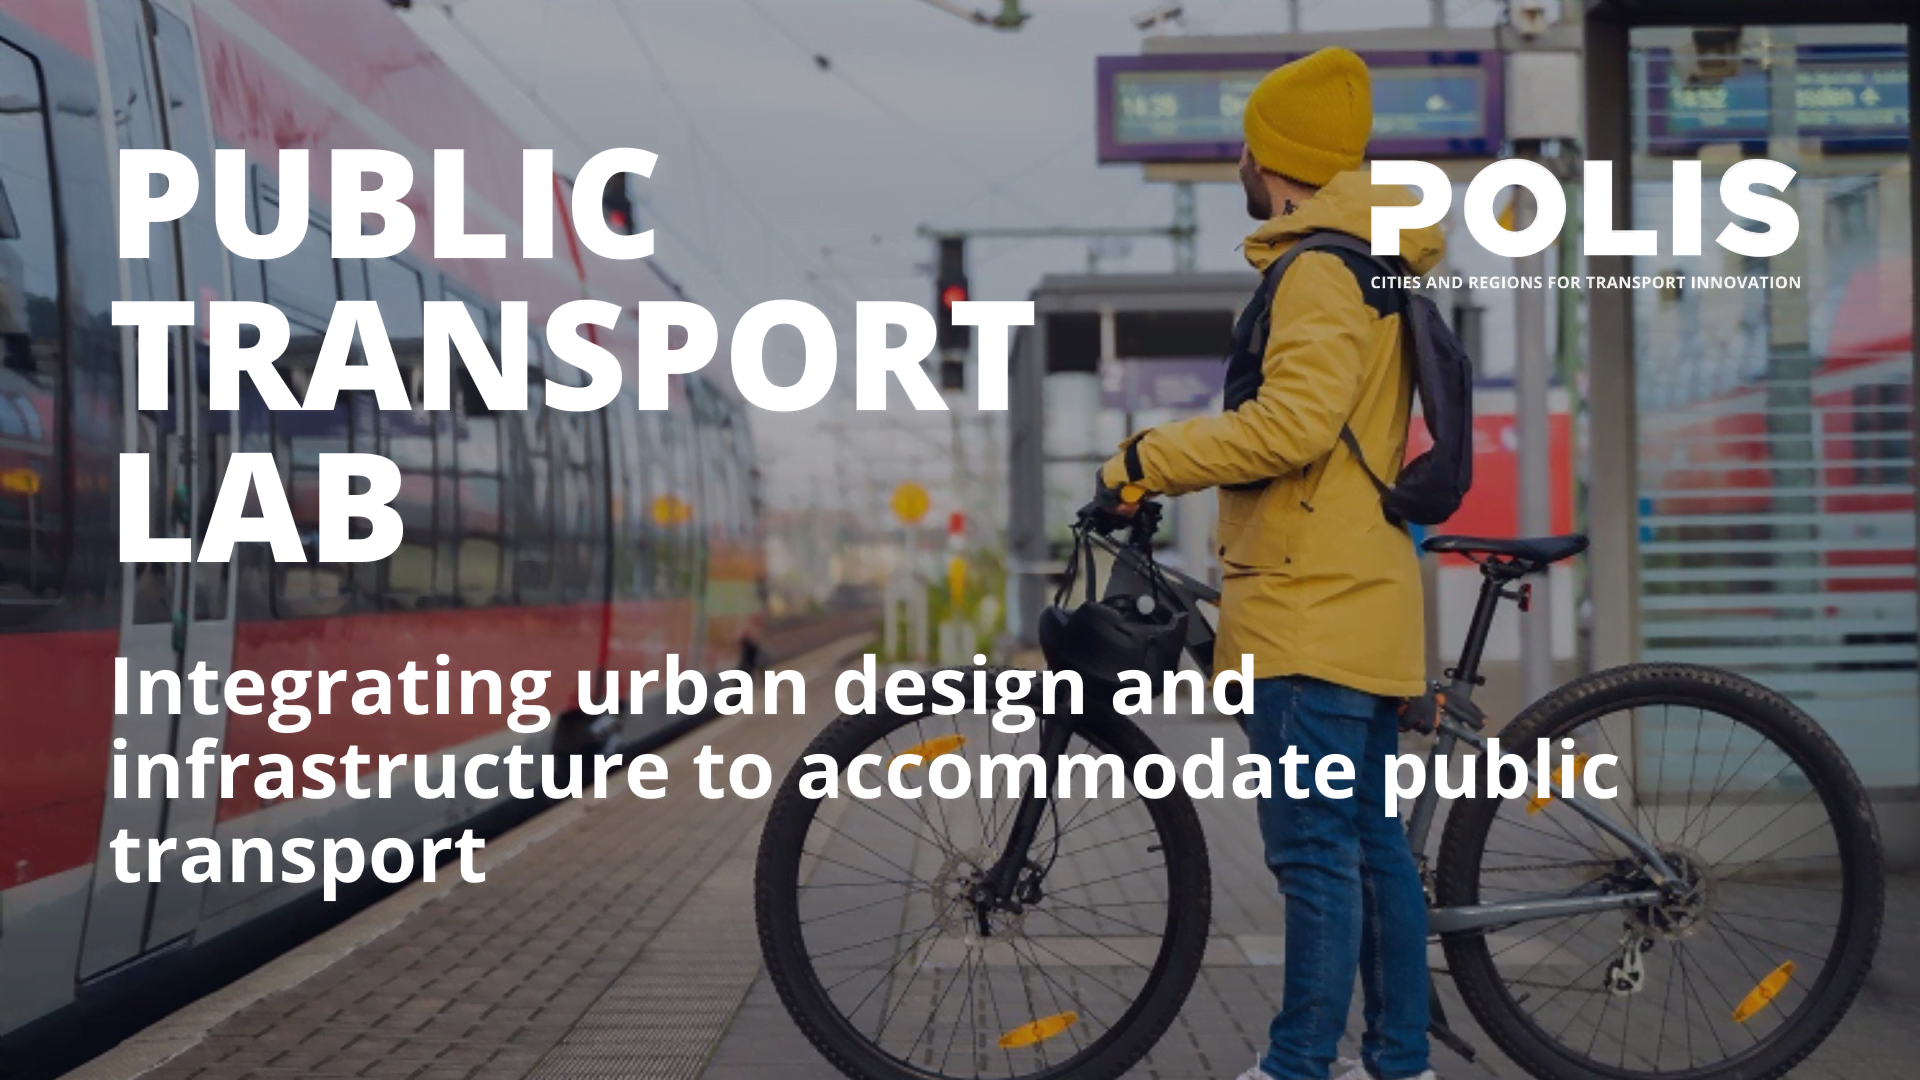 POLIS Public Transport Lab redesigns the city